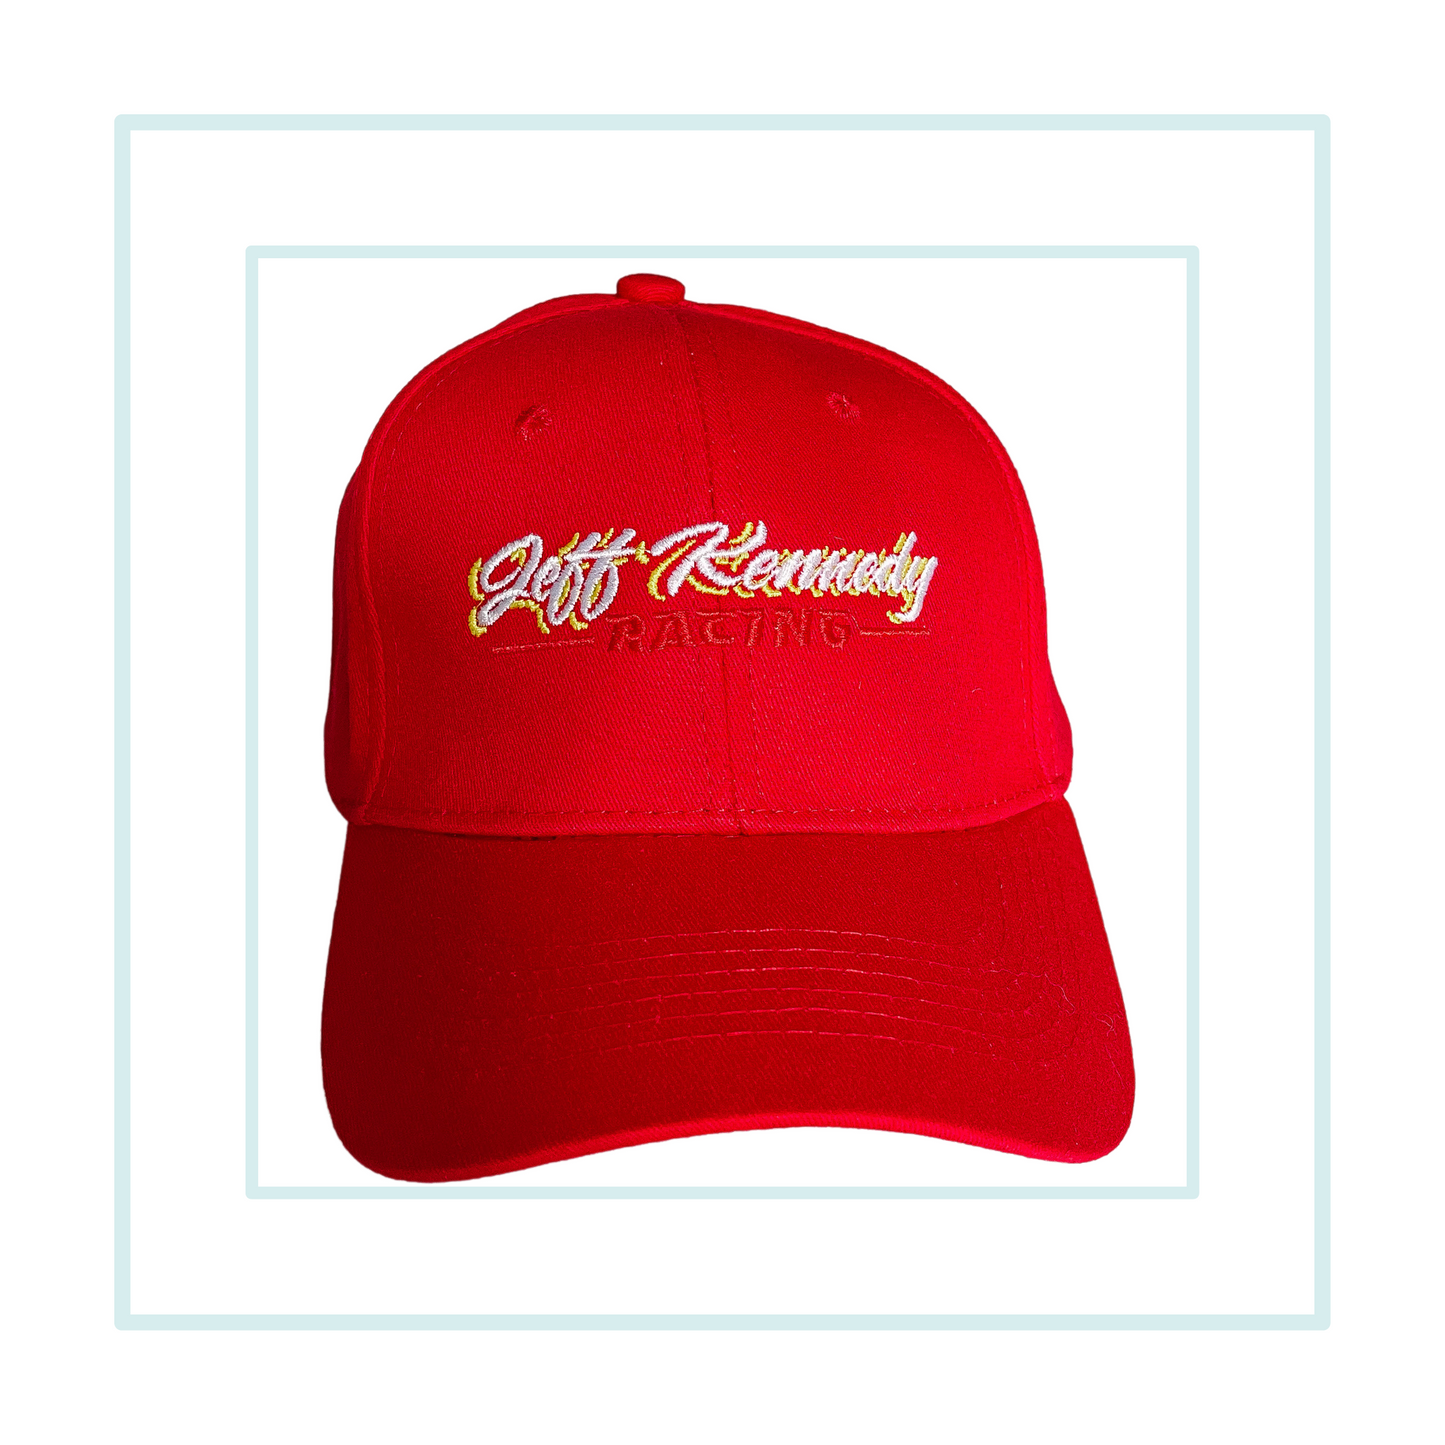 Jeff Kennedy Racing Logo Hat